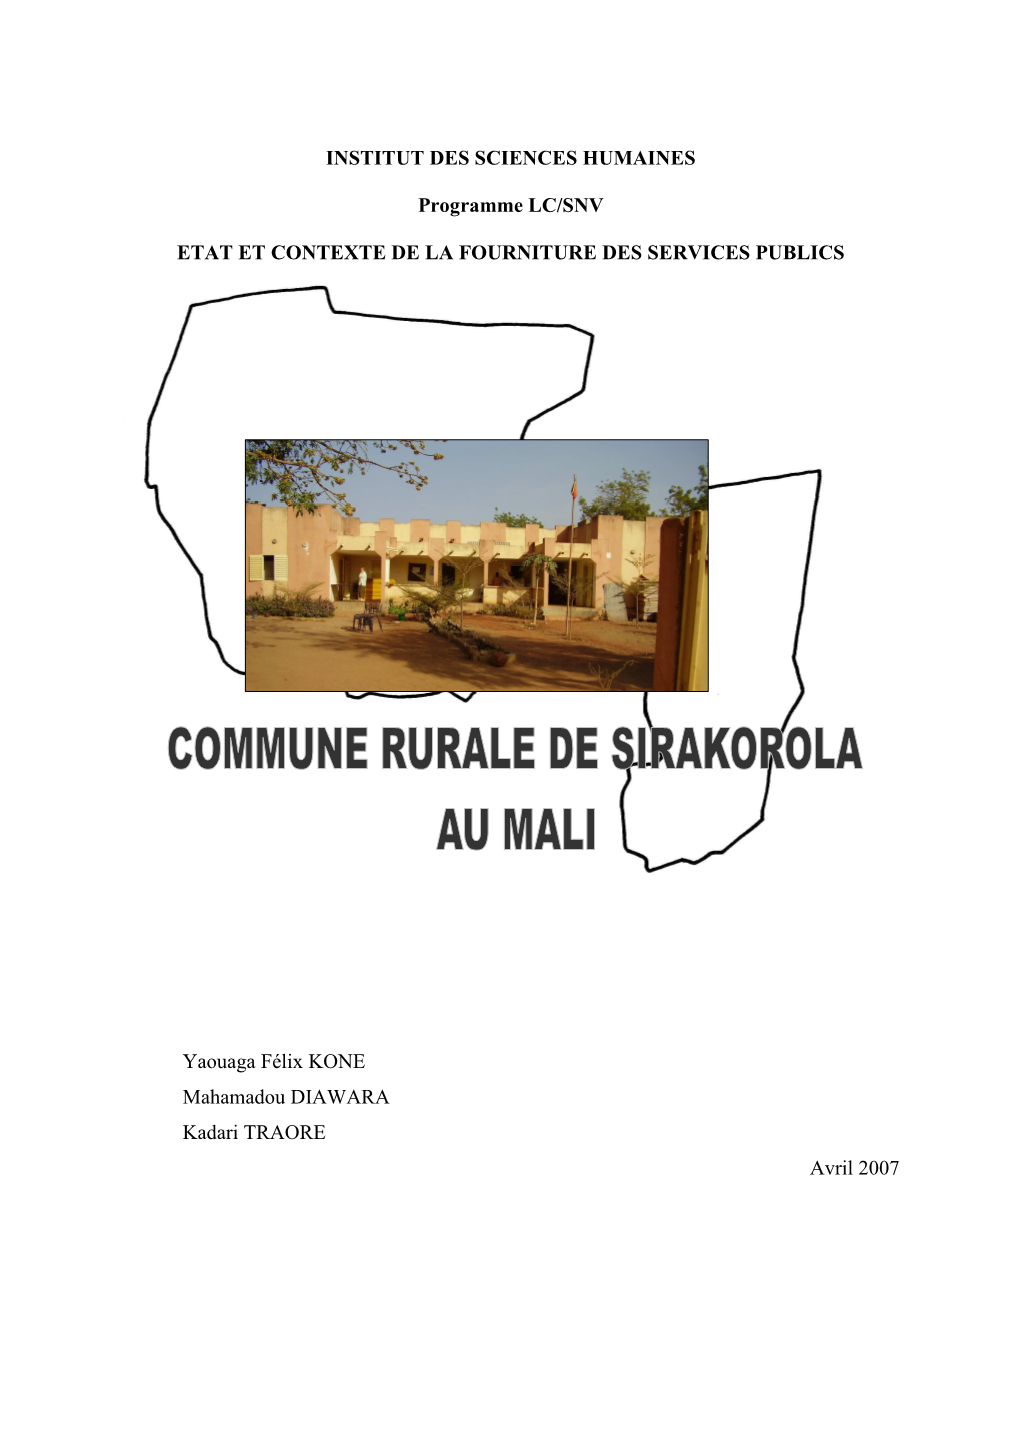 Rapport Final ISH Services Publics Sirakorola Avril 2007